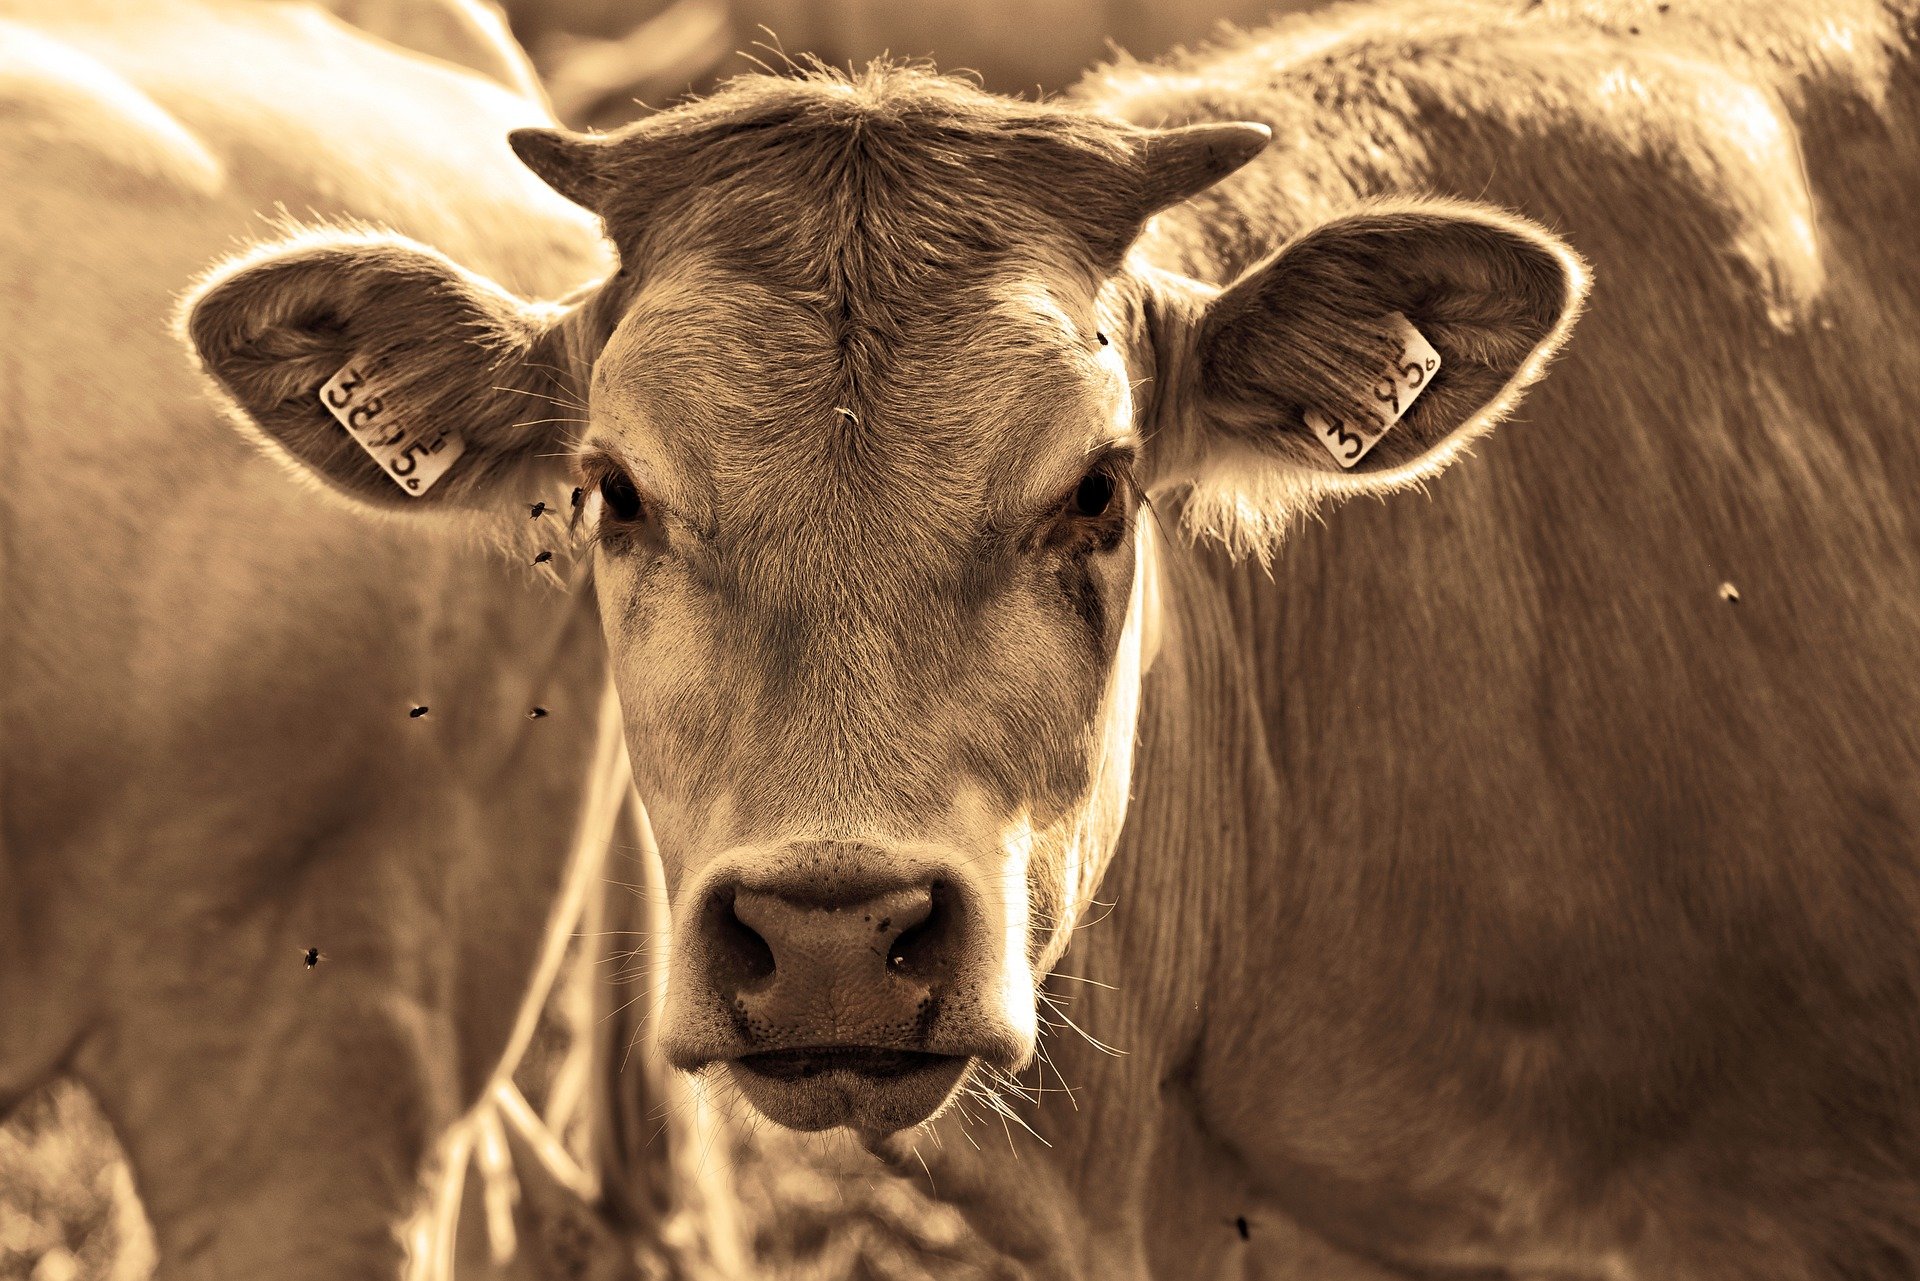  Mad  cow  disease found on Scottish farm govt